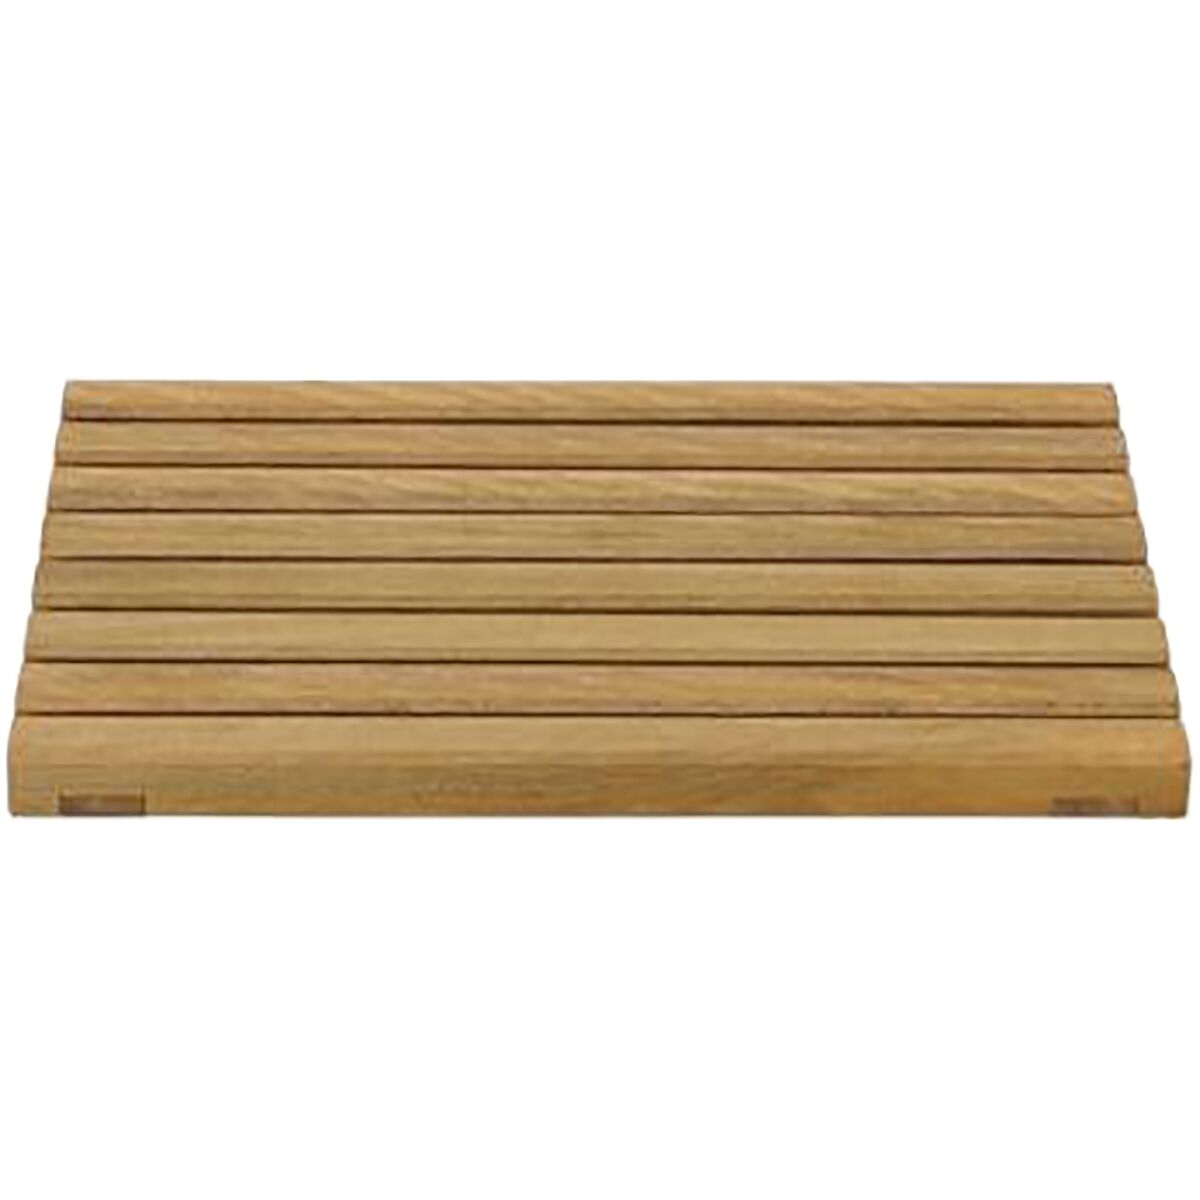 Snow Peak Garden Unit Table Wood Insert - 2-Piece